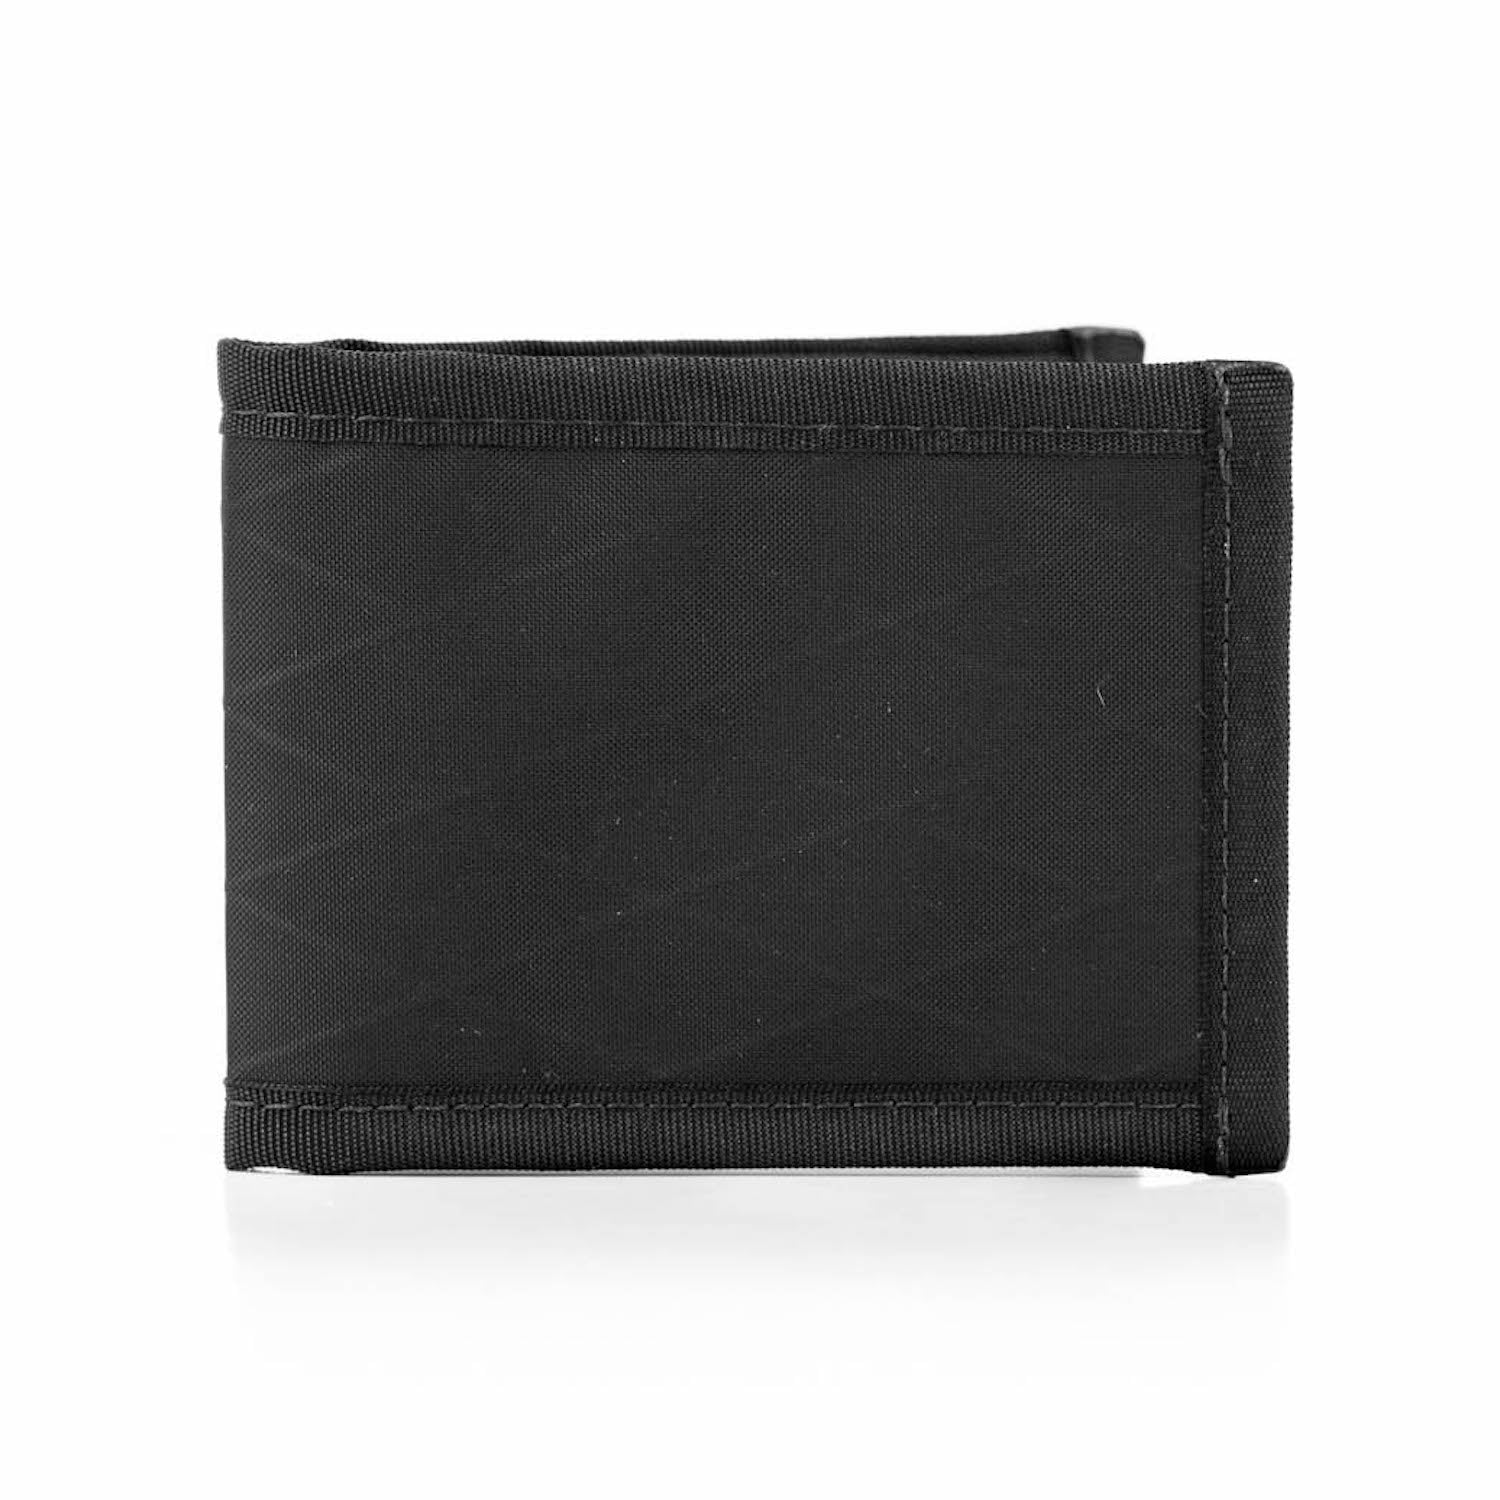 Flowfold Minimalist Slim Vanguard Bifold Wallet Made in USA, Maine by Flowfold Black 